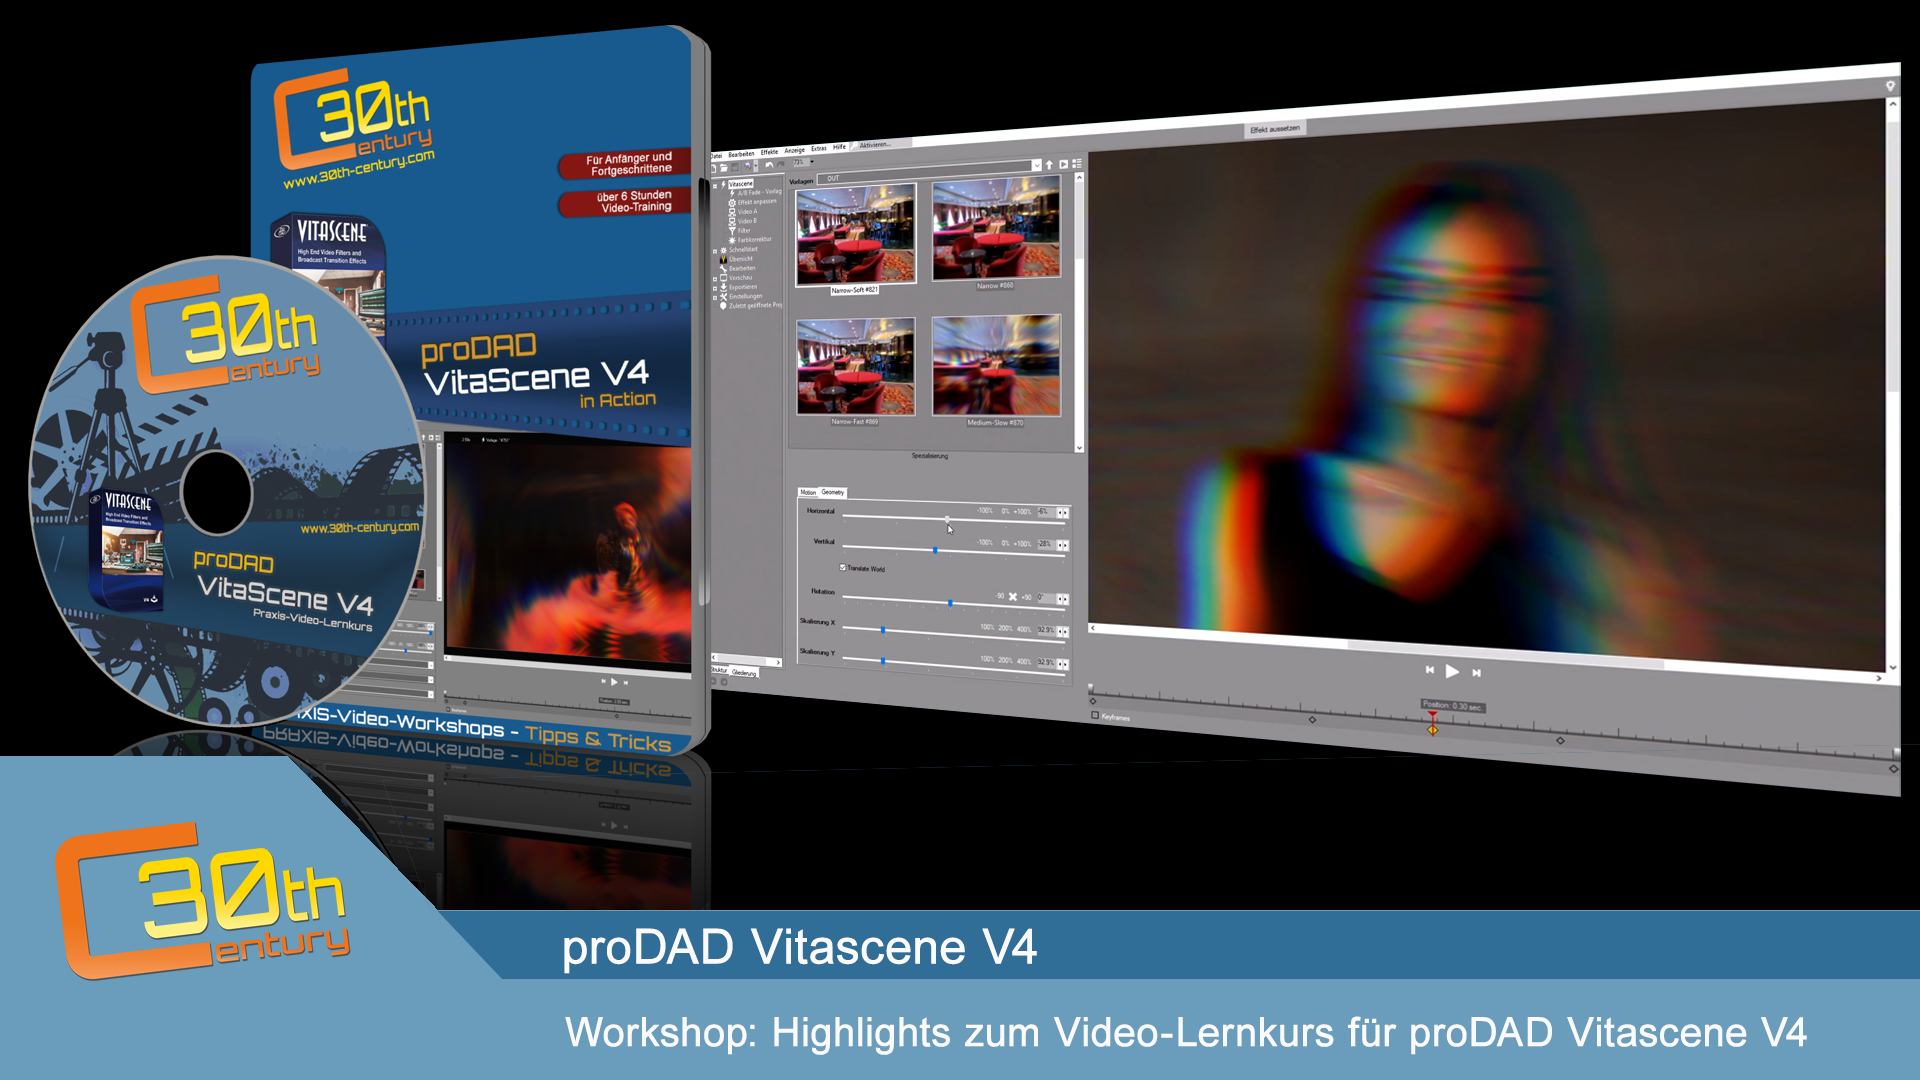 proDAD VitaScene 5.0.312 download the new version for windows